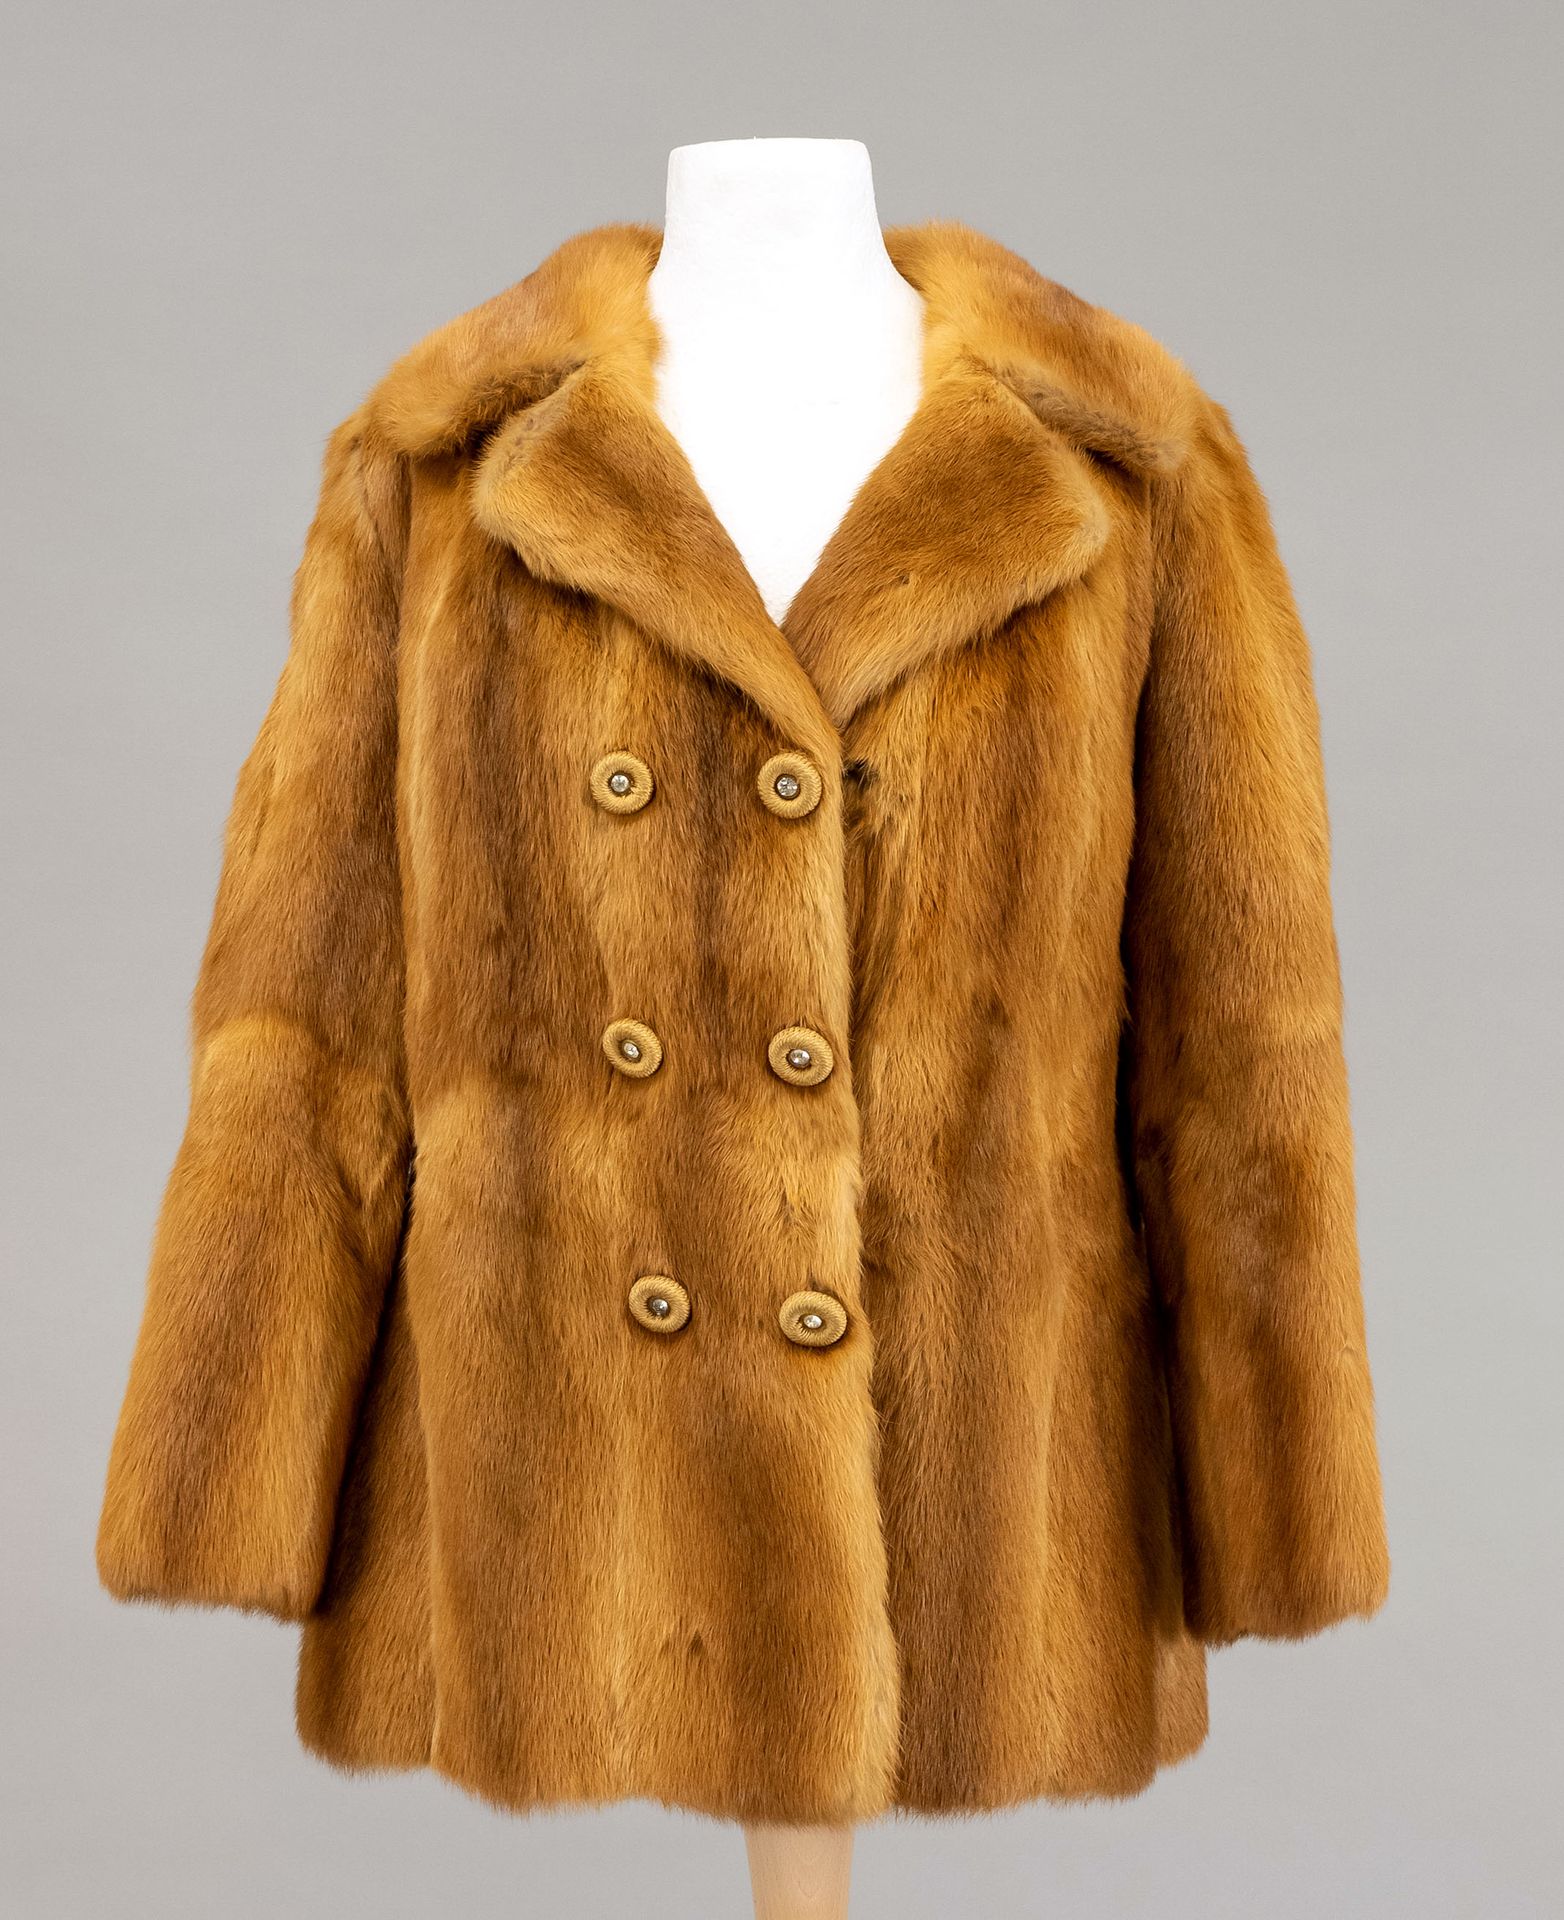 Null 女士毛皮夹克，内衬中的标签标有Berliner Chic，没有标明尺寸，有轻微磨损痕迹。